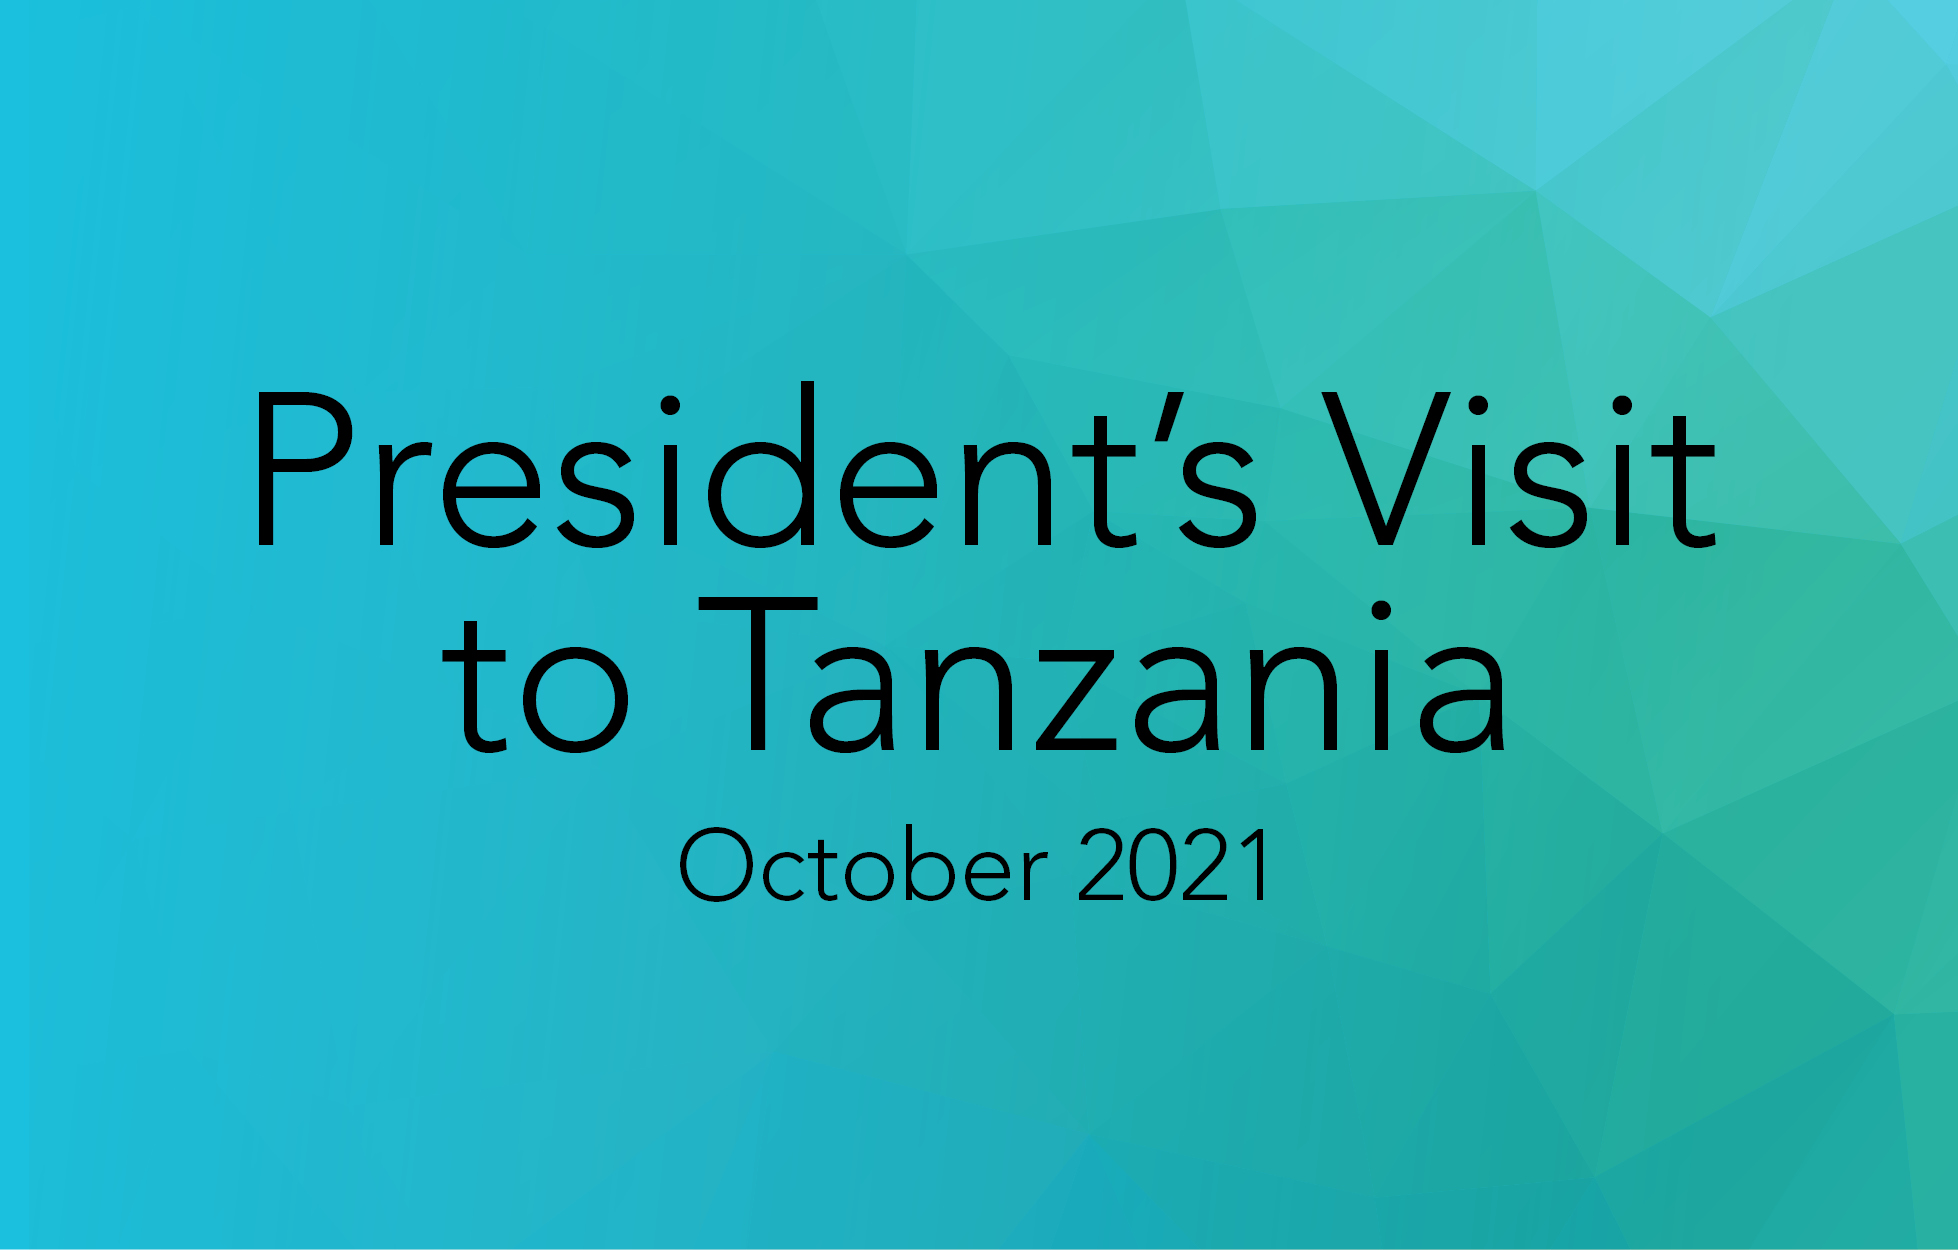 The WF President visits Tanzania October ’21